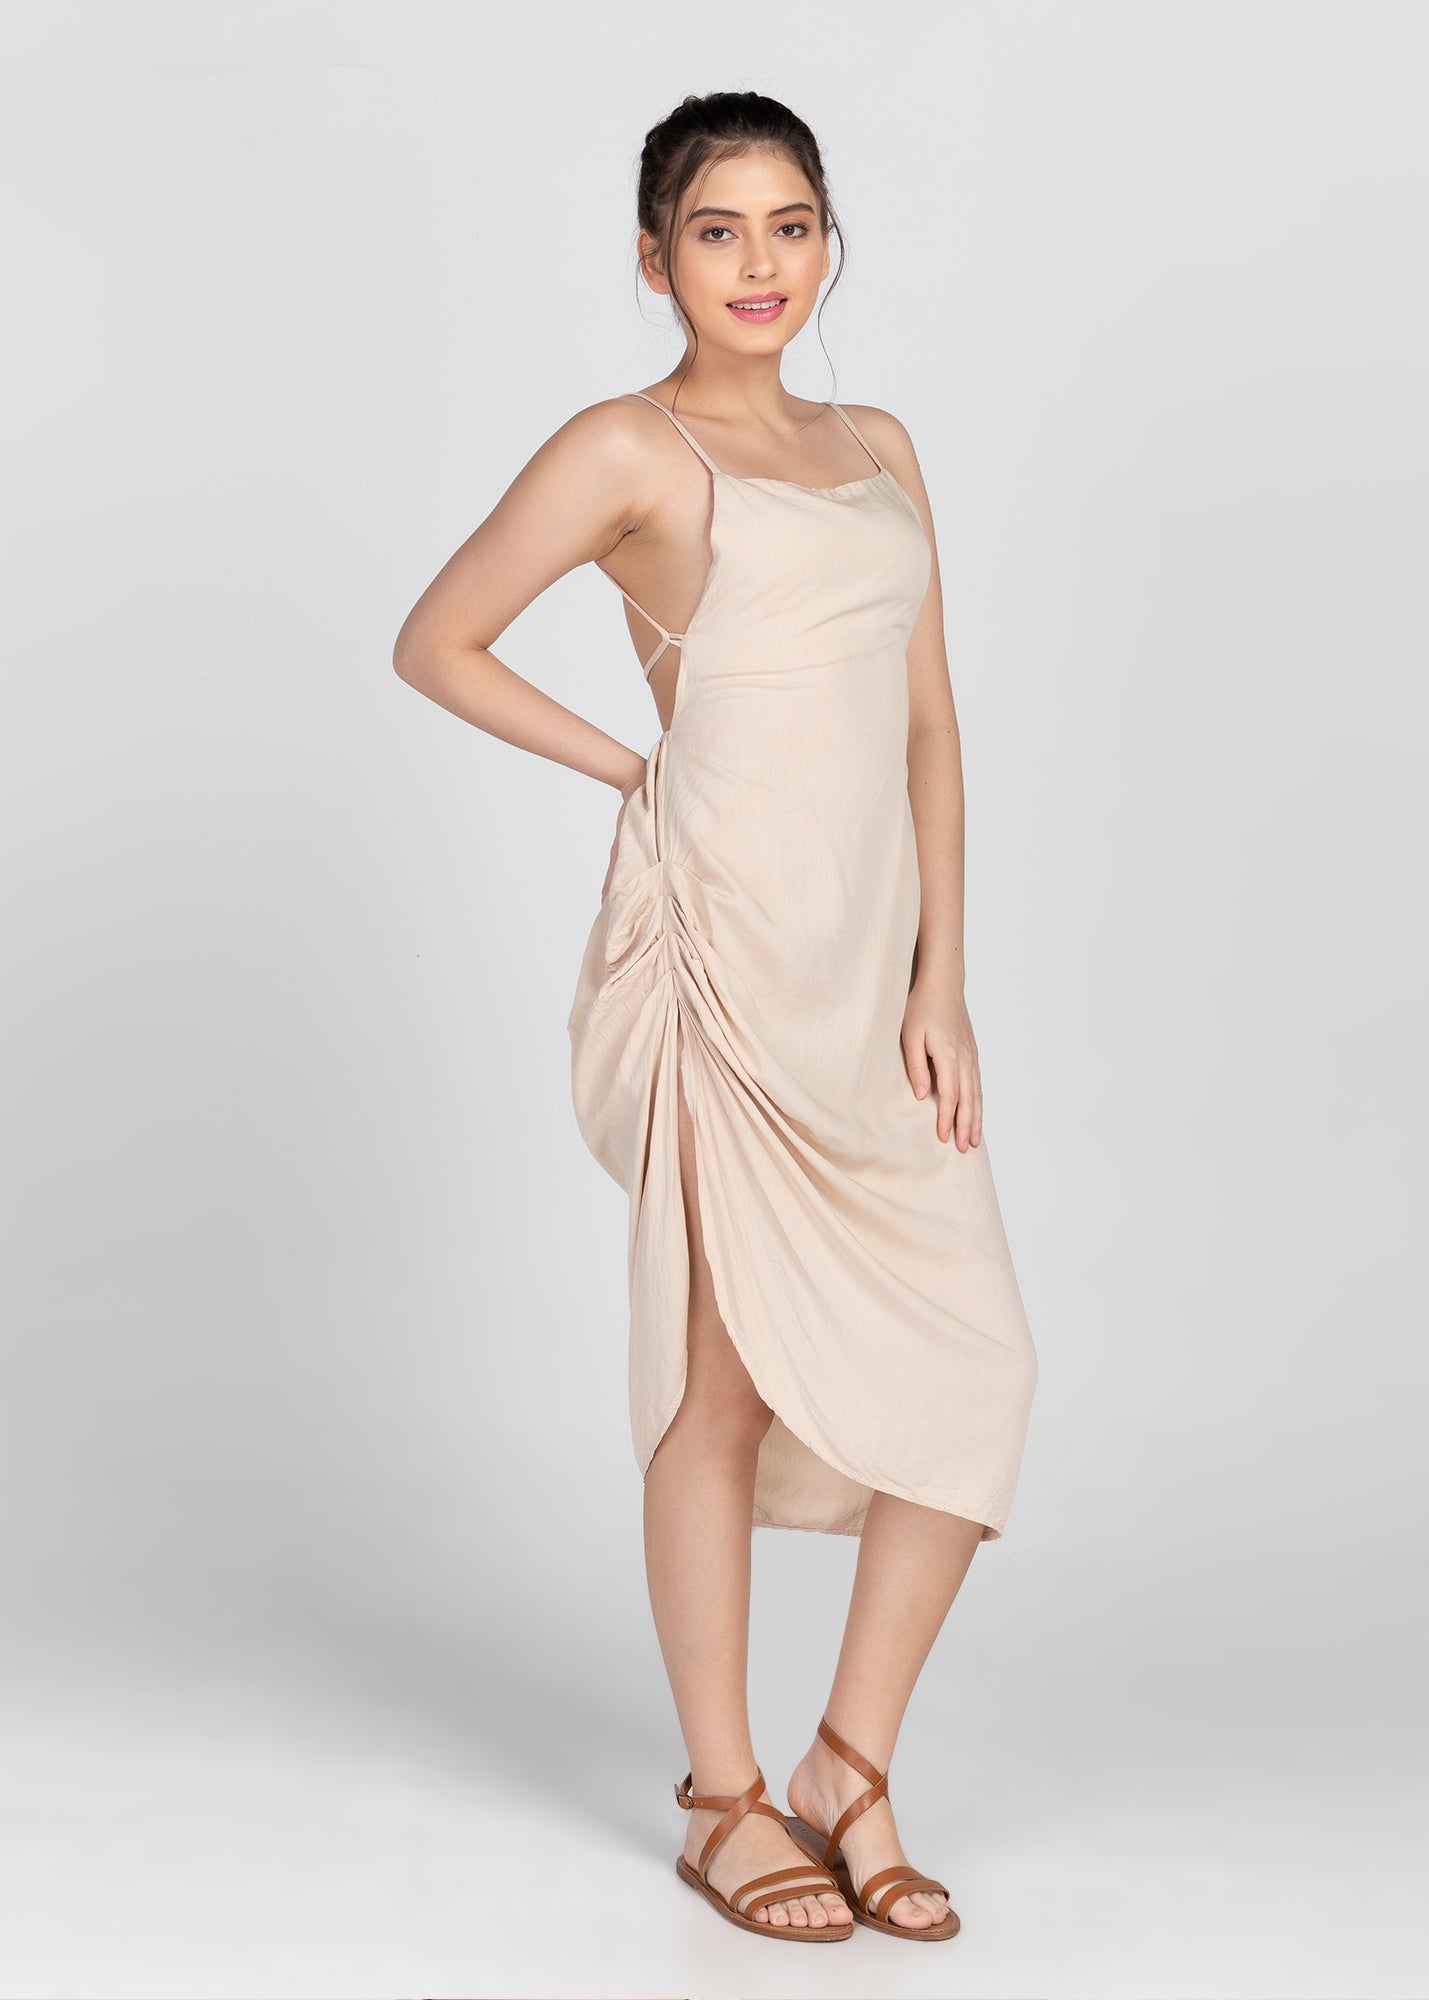 Asymmetric Linen String Dress (Cream)